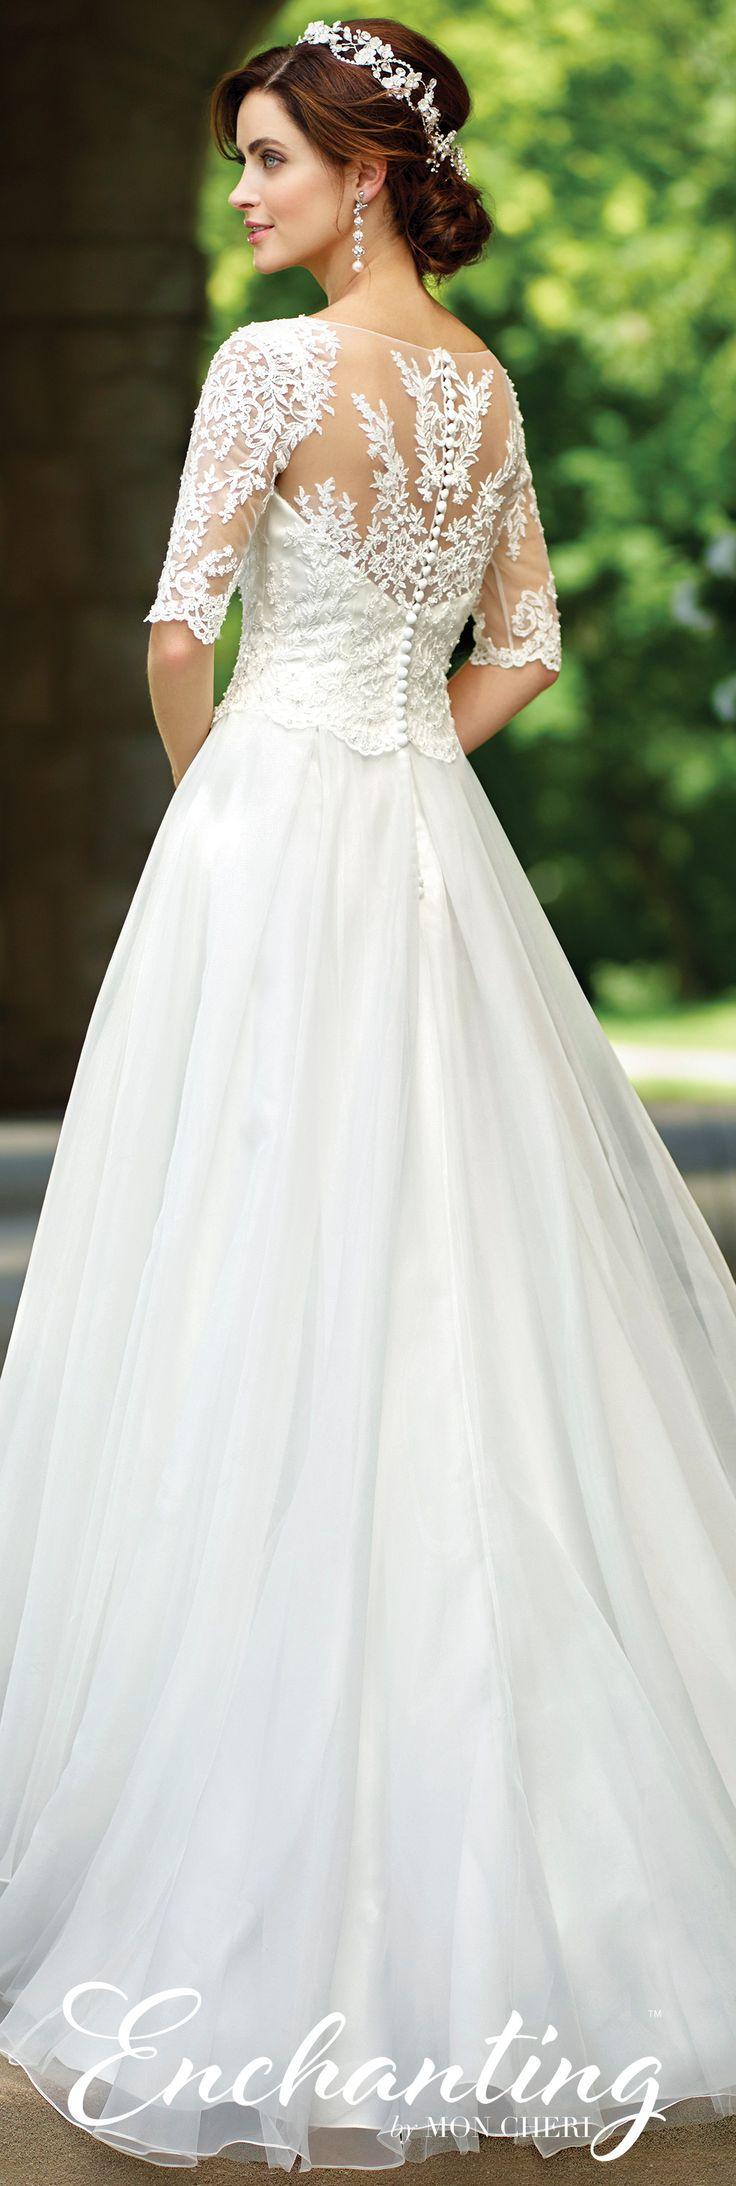 Mariage - Organza A-Line Wedding Dress- 117177- Enchanting By Mon Cheri